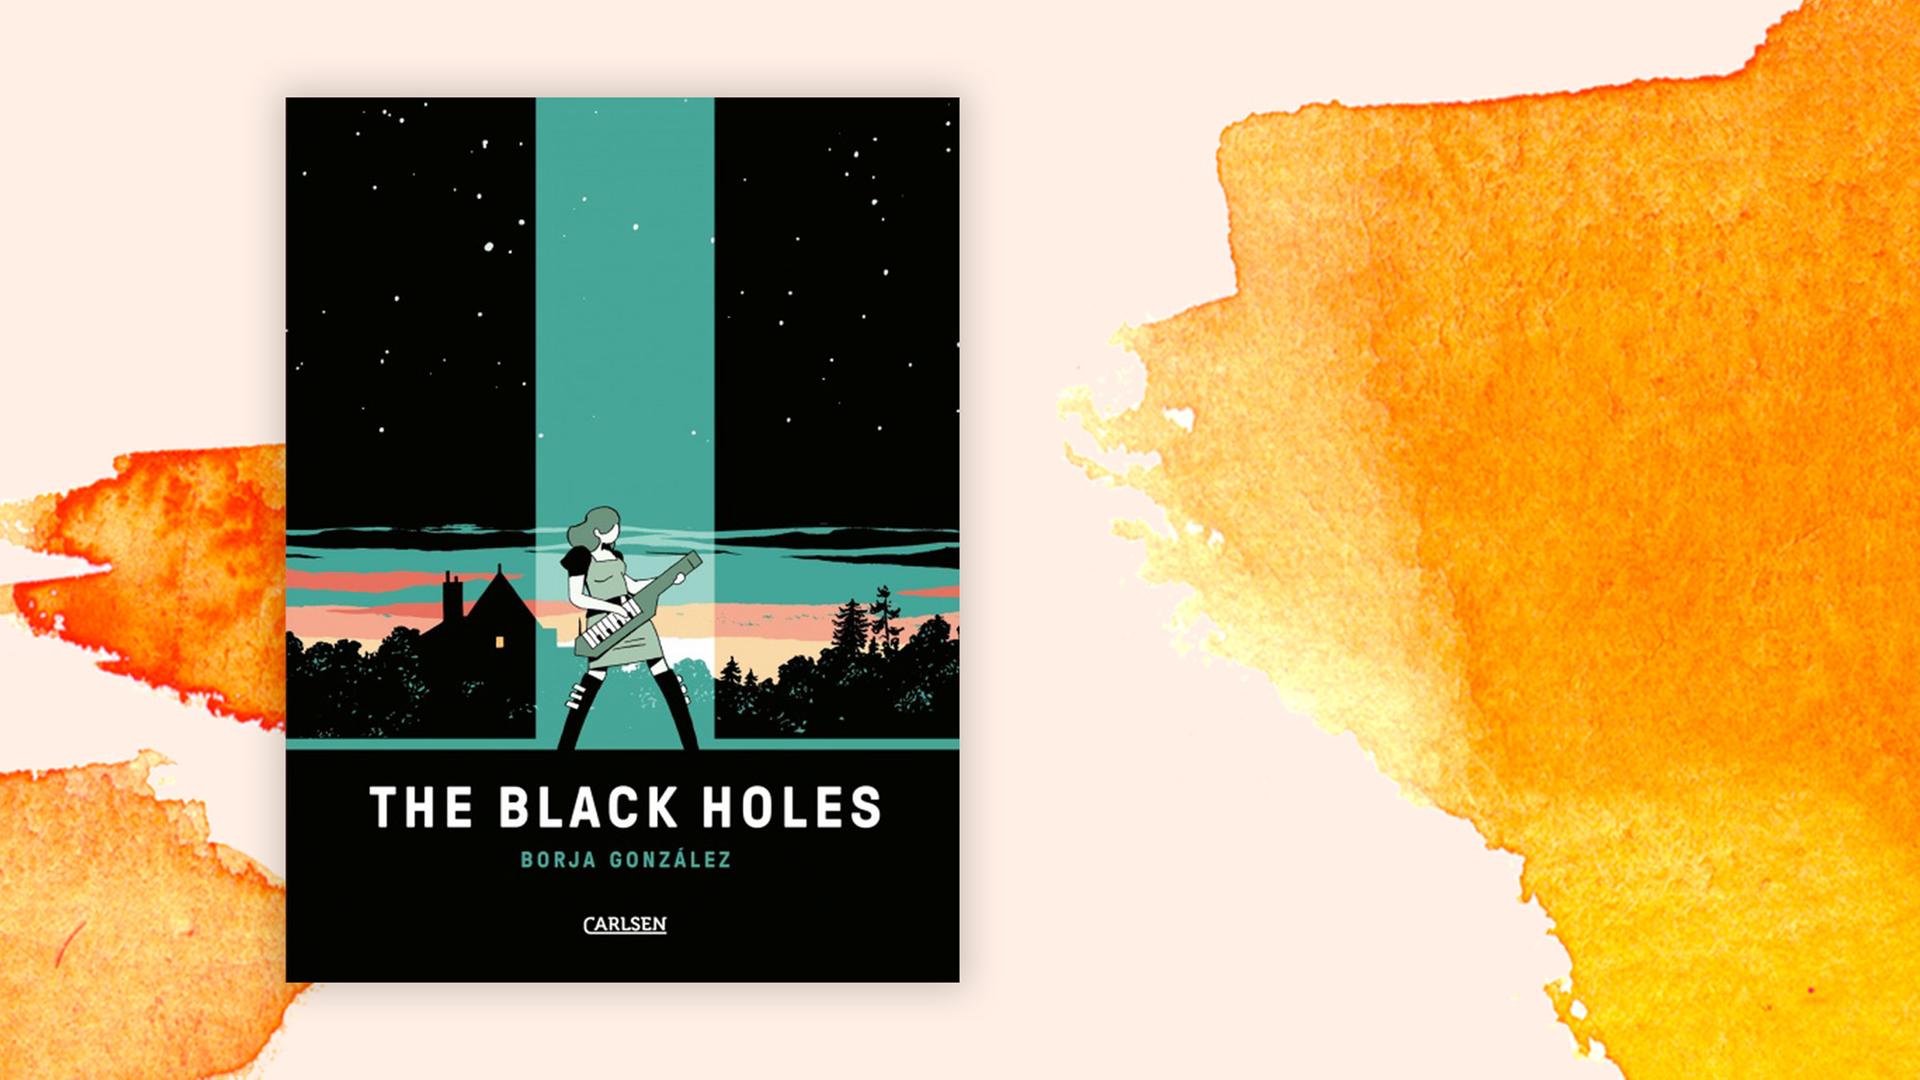 Buchcover zu Borja González: "The Black Holes"